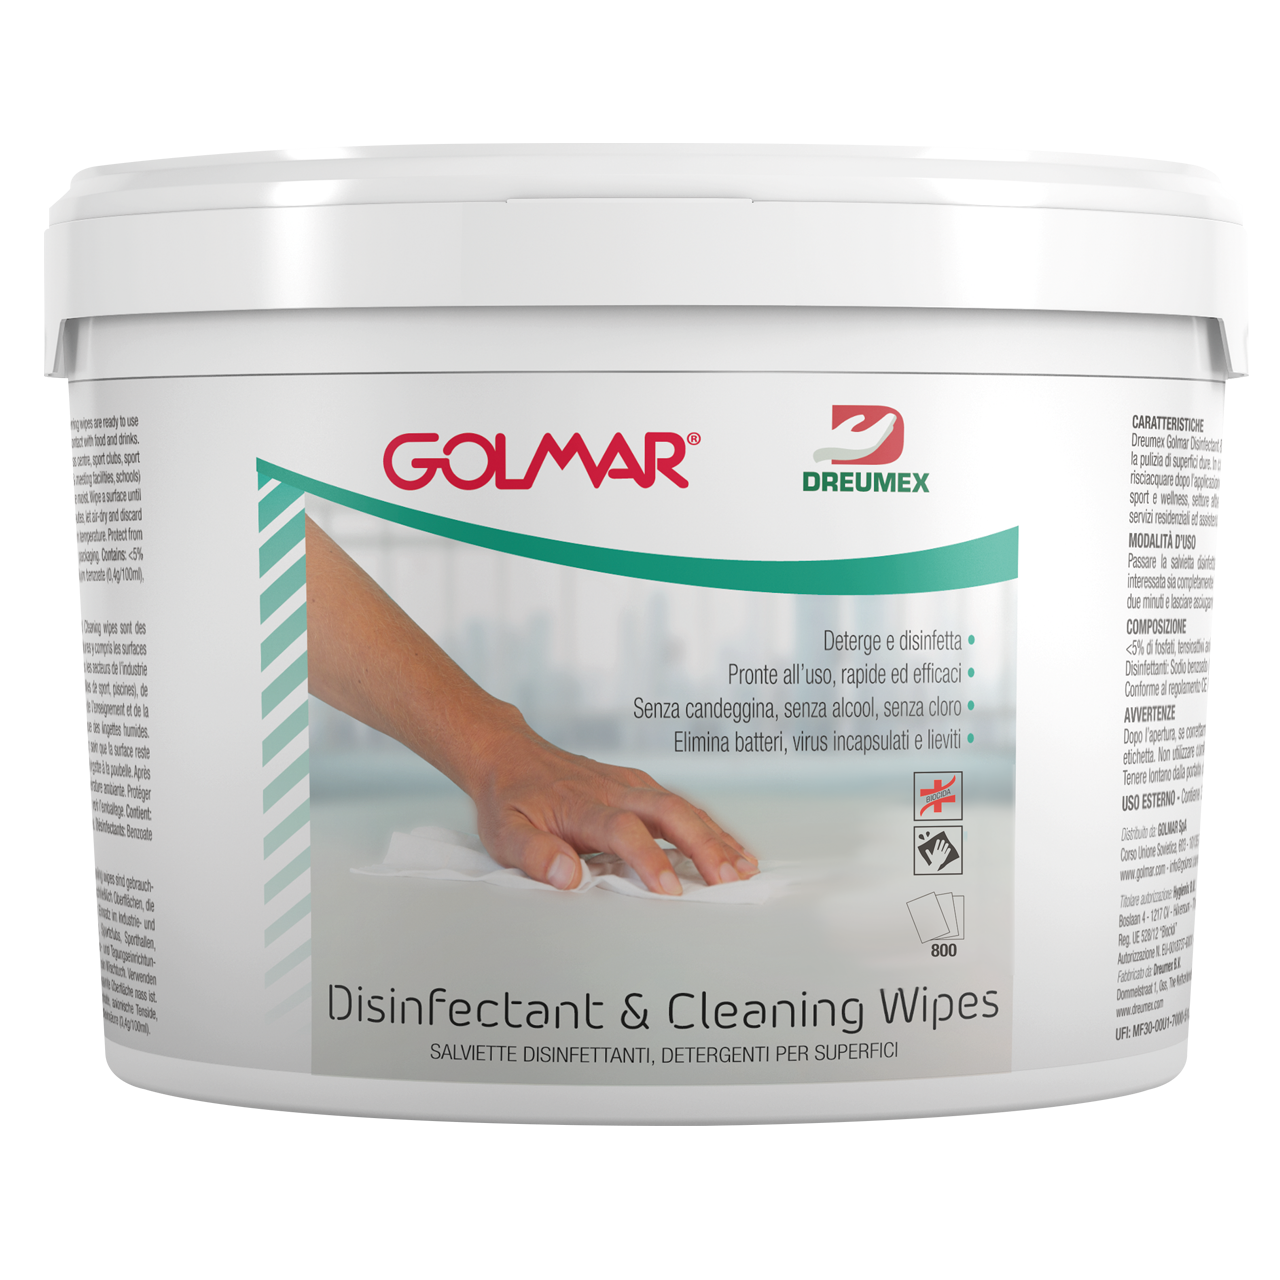 Salviette Disinfettanti Disinfectant & Cleaning Wipes 800 fogli